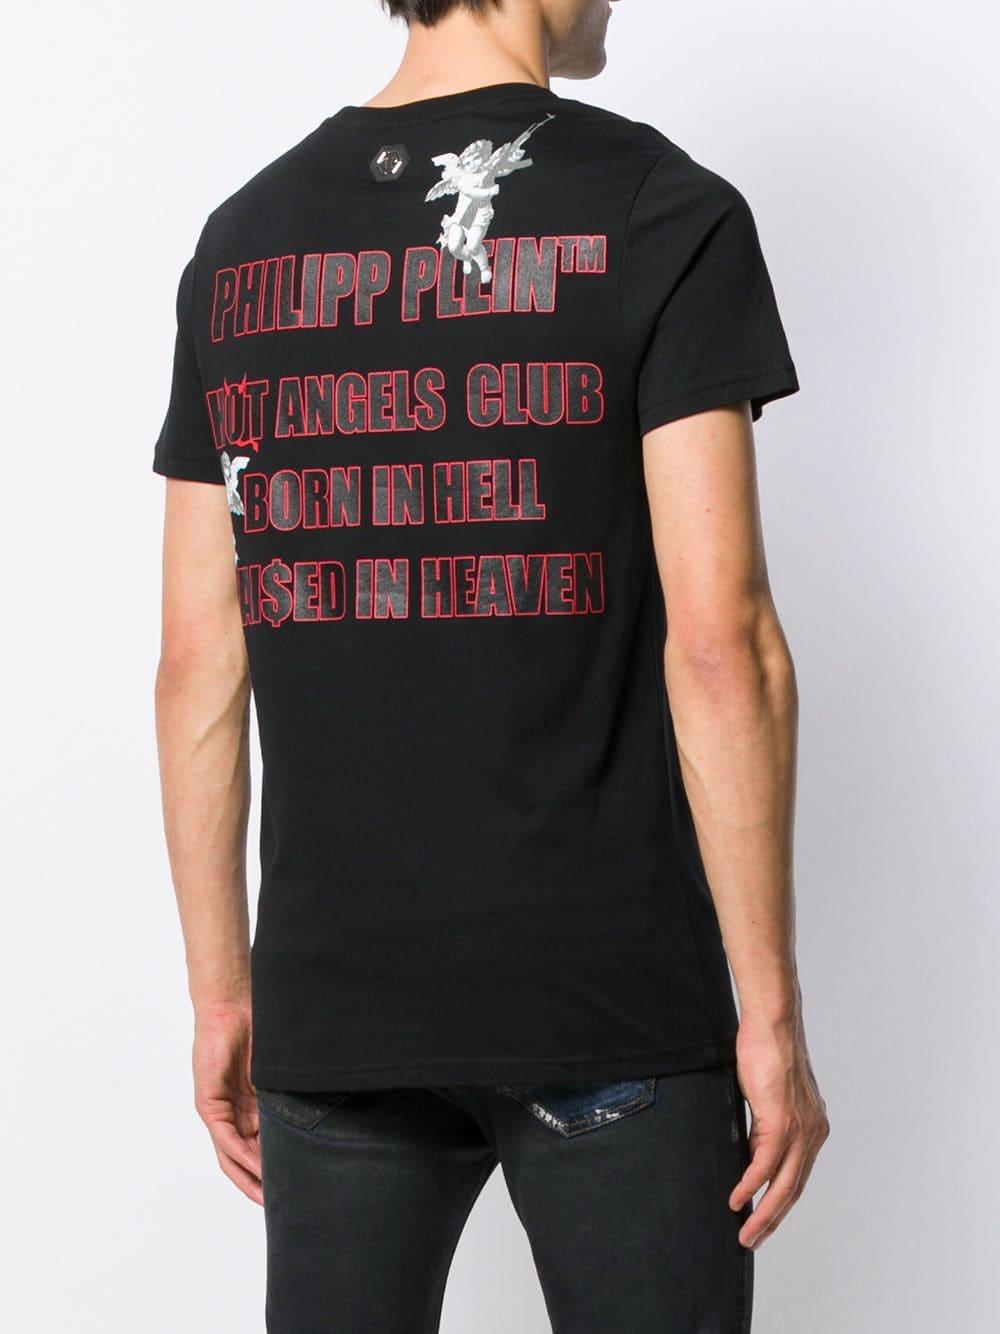 Philipp Plein Hot Angels T-shirt in Black for Men - Lyst